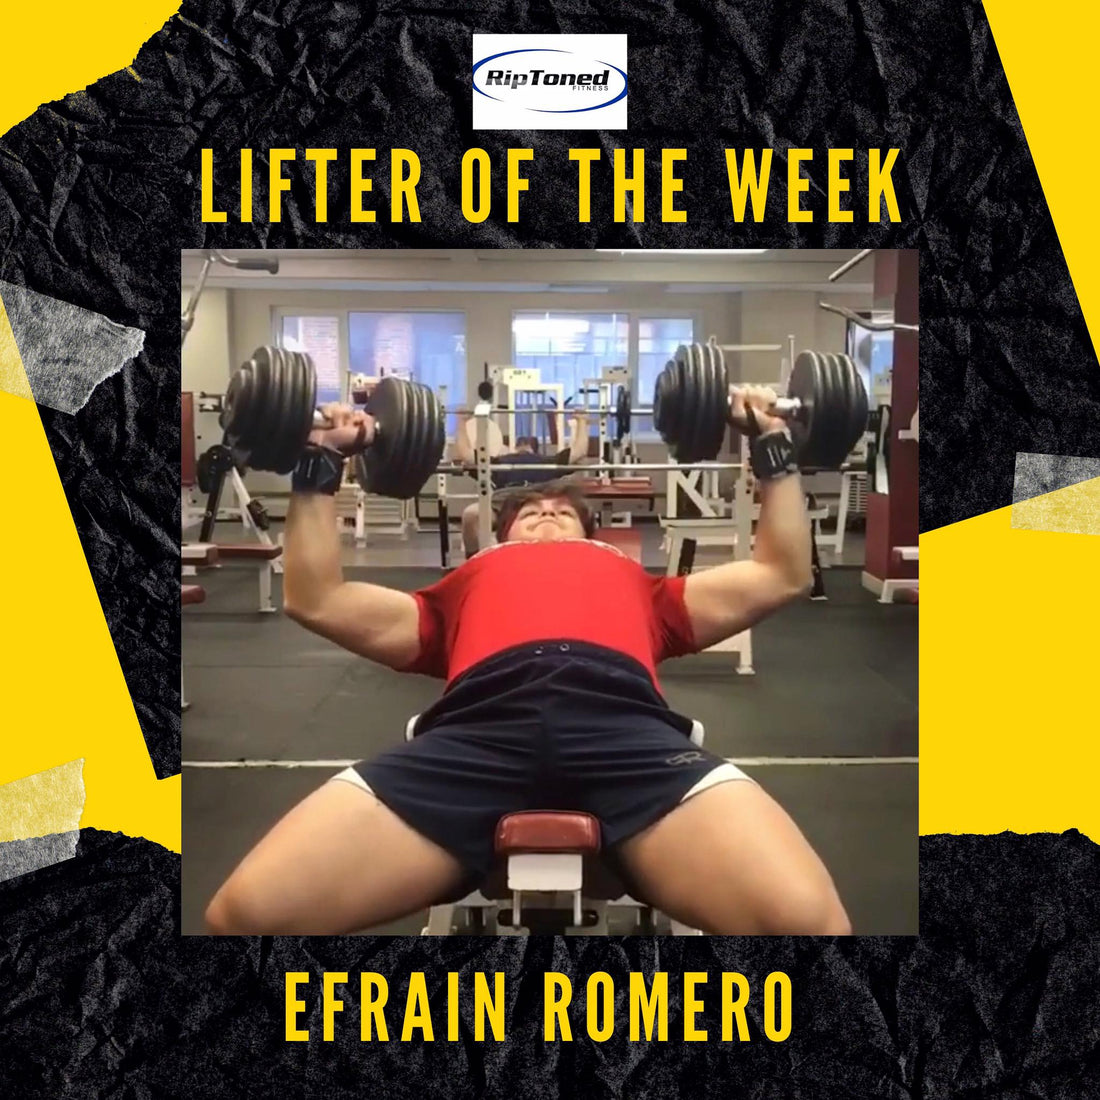 Lifter of the Week - Efrain Romero - Rip Toned